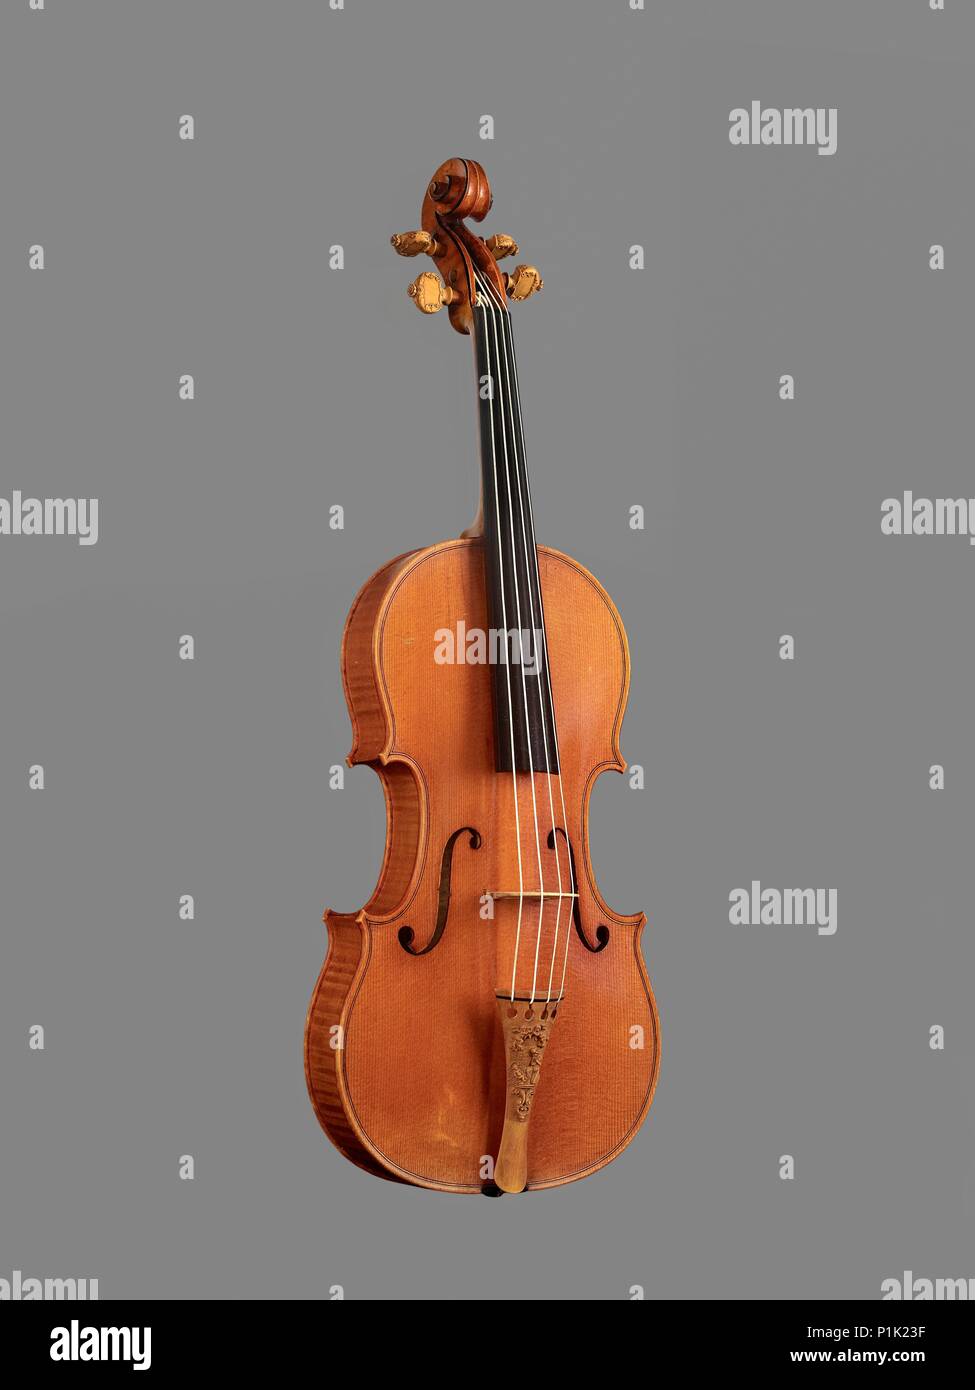 Le Messie Messie (violon), 1716. Artiste : Antonio Stradivari. Banque D'Images